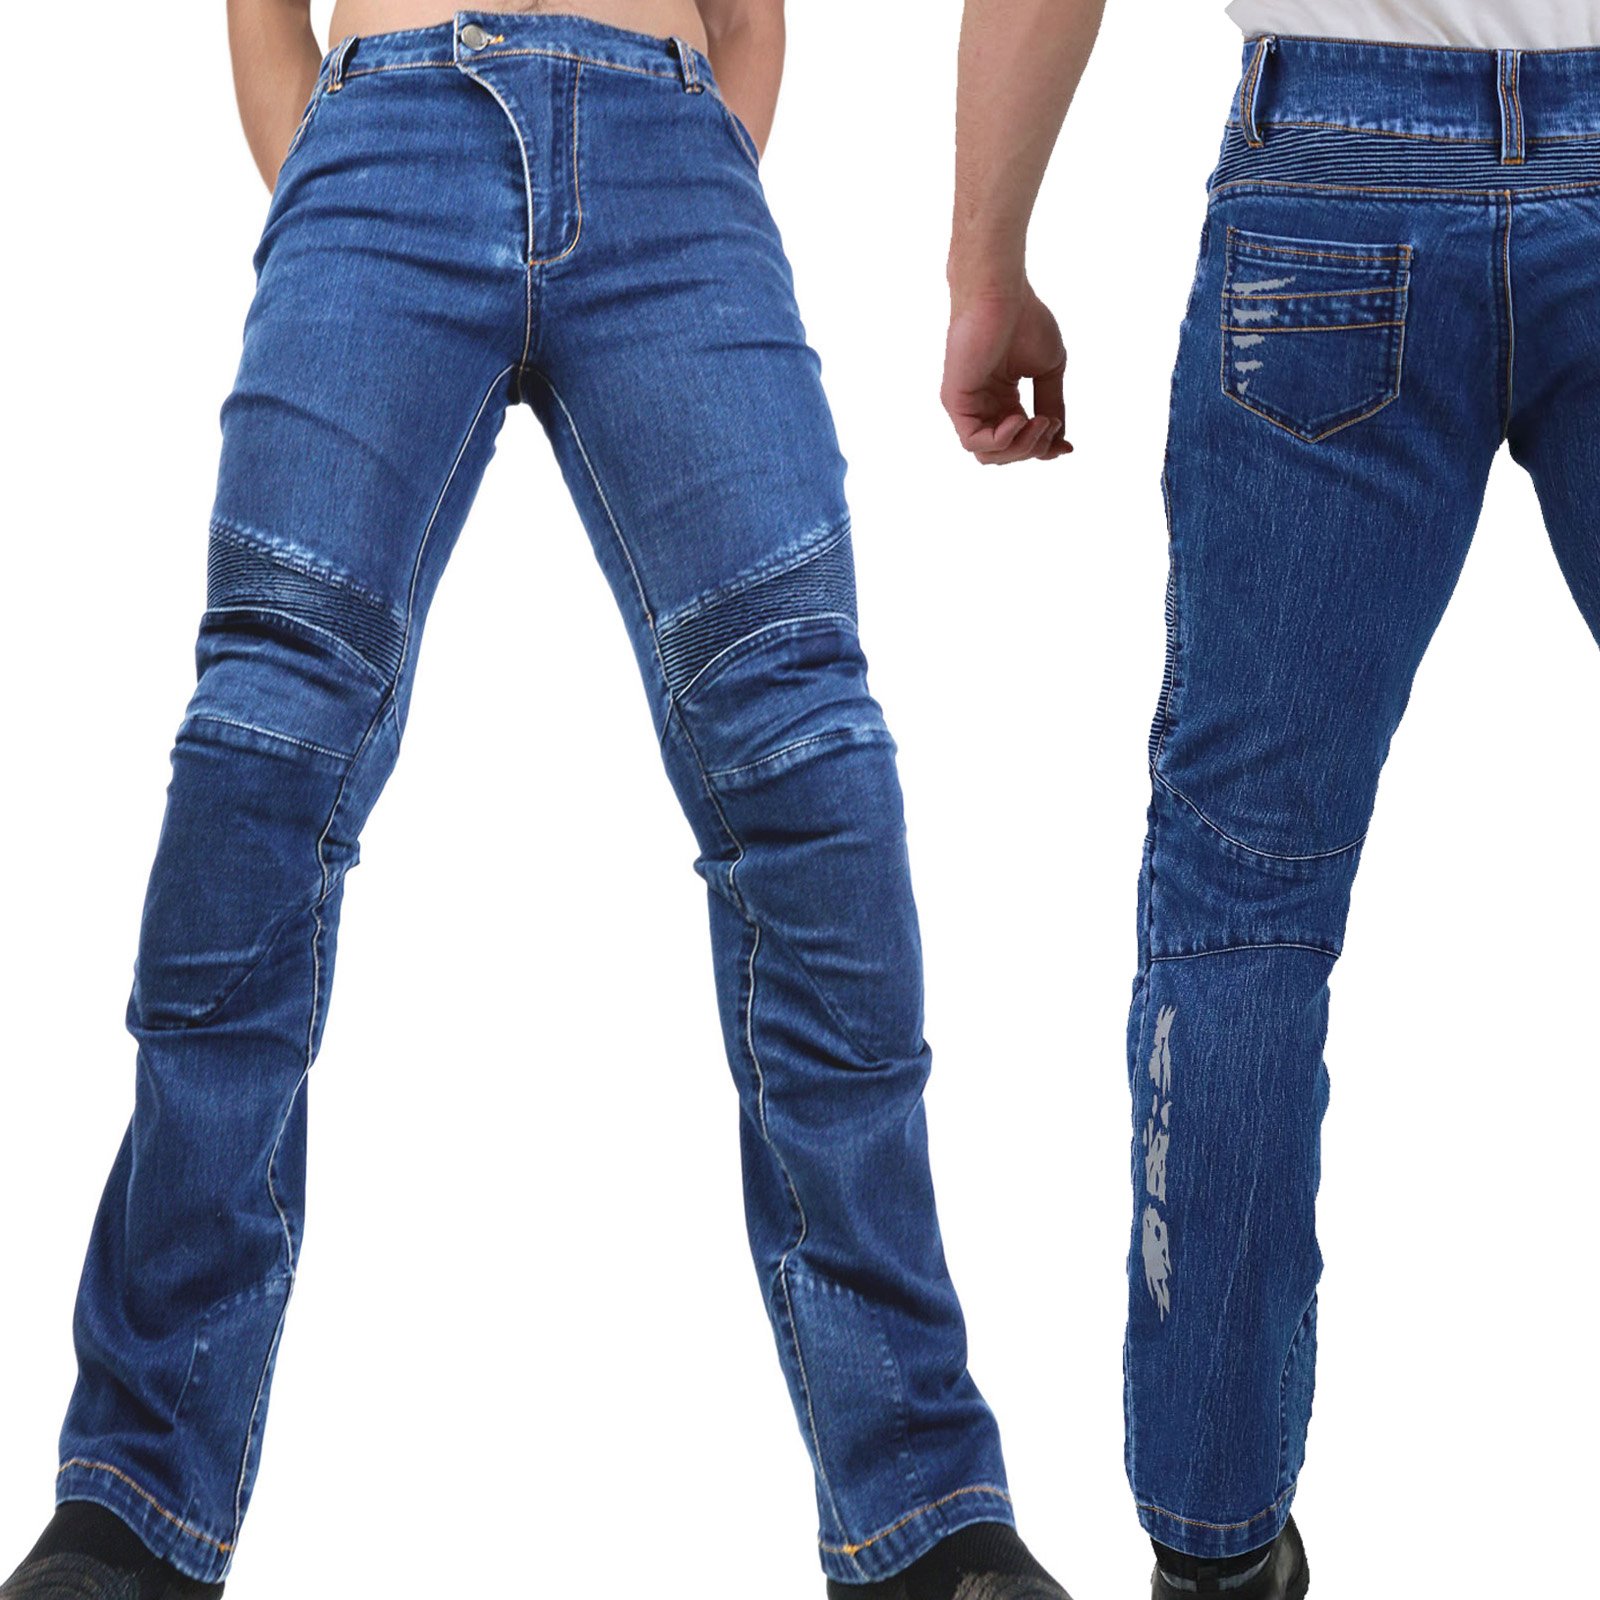 Motorradhose Jeans -Ranger- Leicht Dünn Herren Sommer Textil Jeanshose Slim Fit Motorrad Textilhose Männer Eng Stretch - blau - L von Nerve Shop